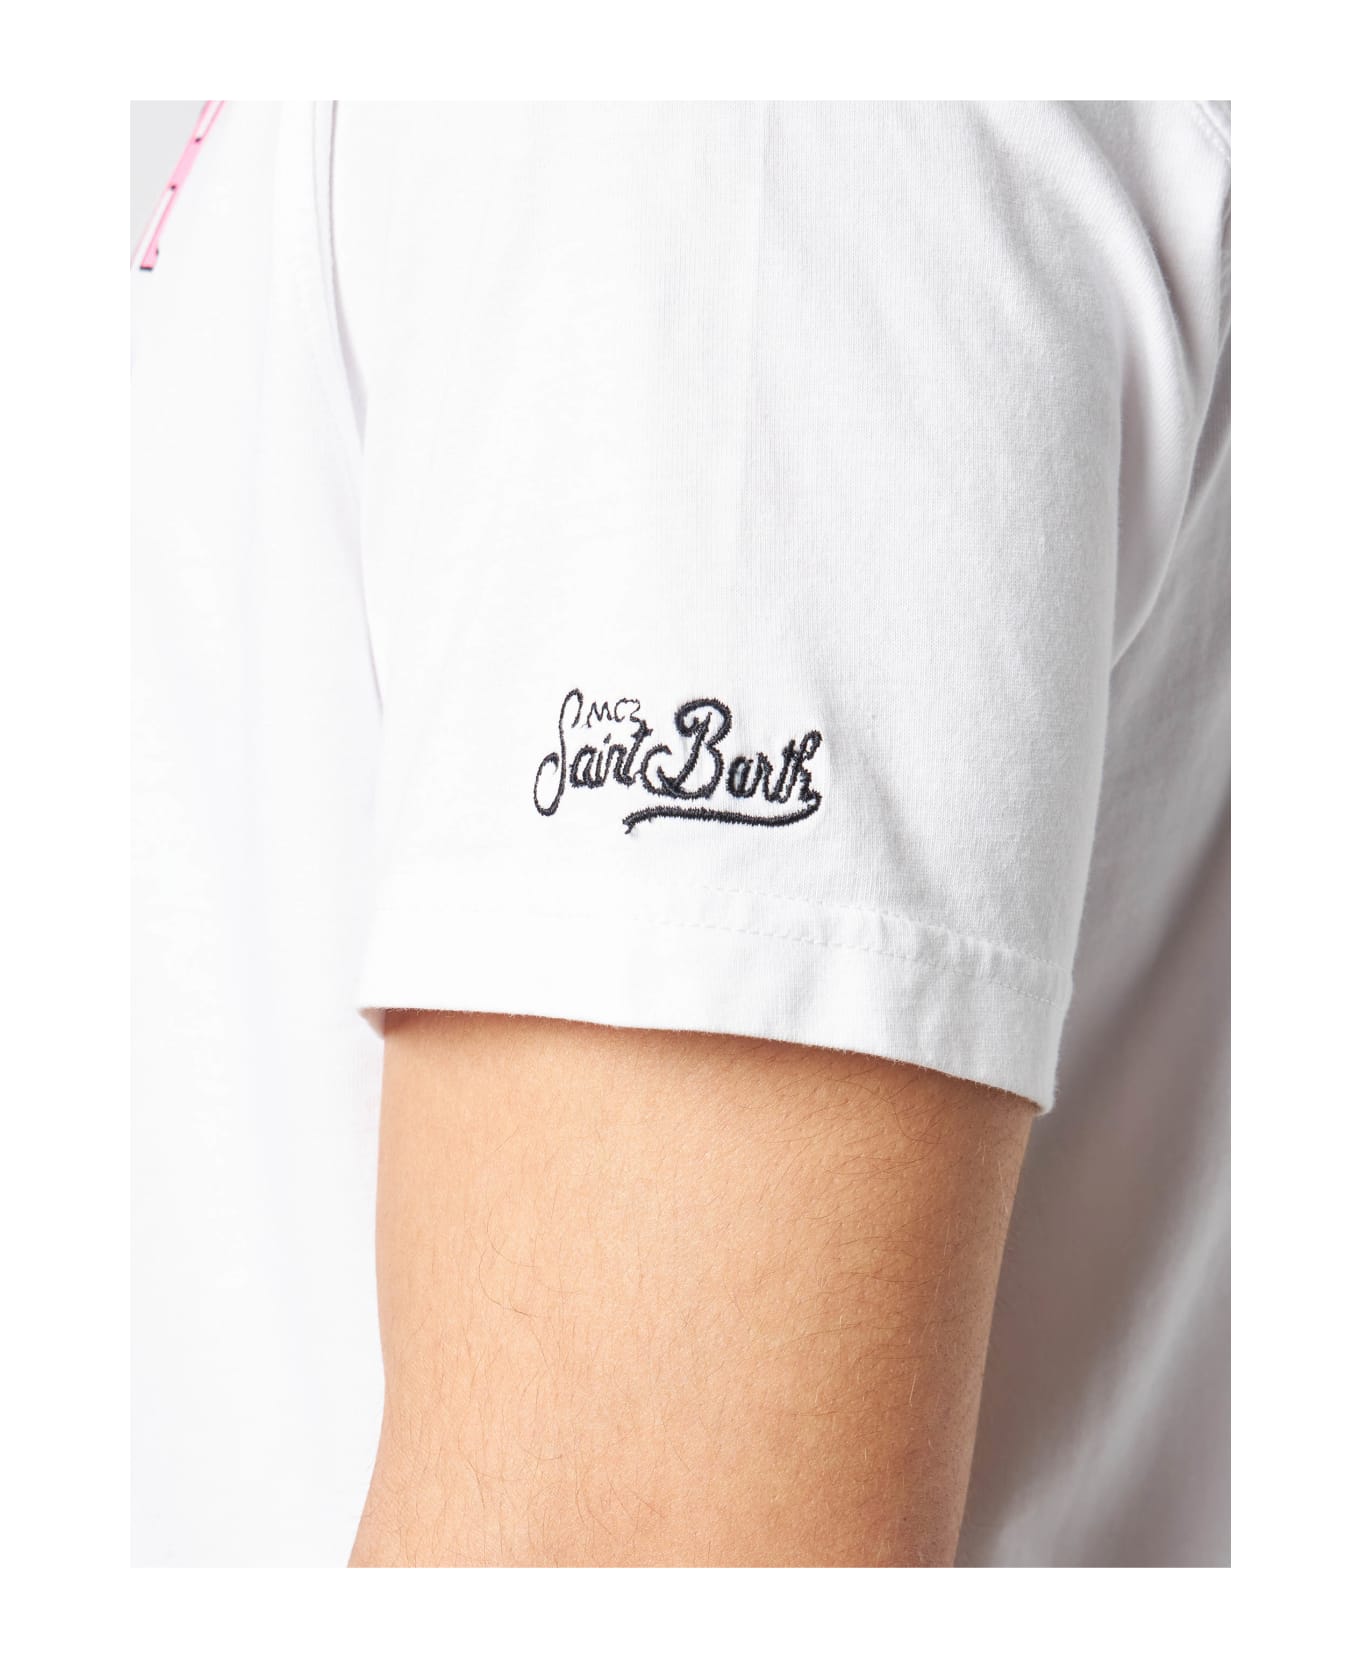 MC2 Saint Barth Man Cotton T-shirt With St.barth Airlines Print - WHITE シャツ